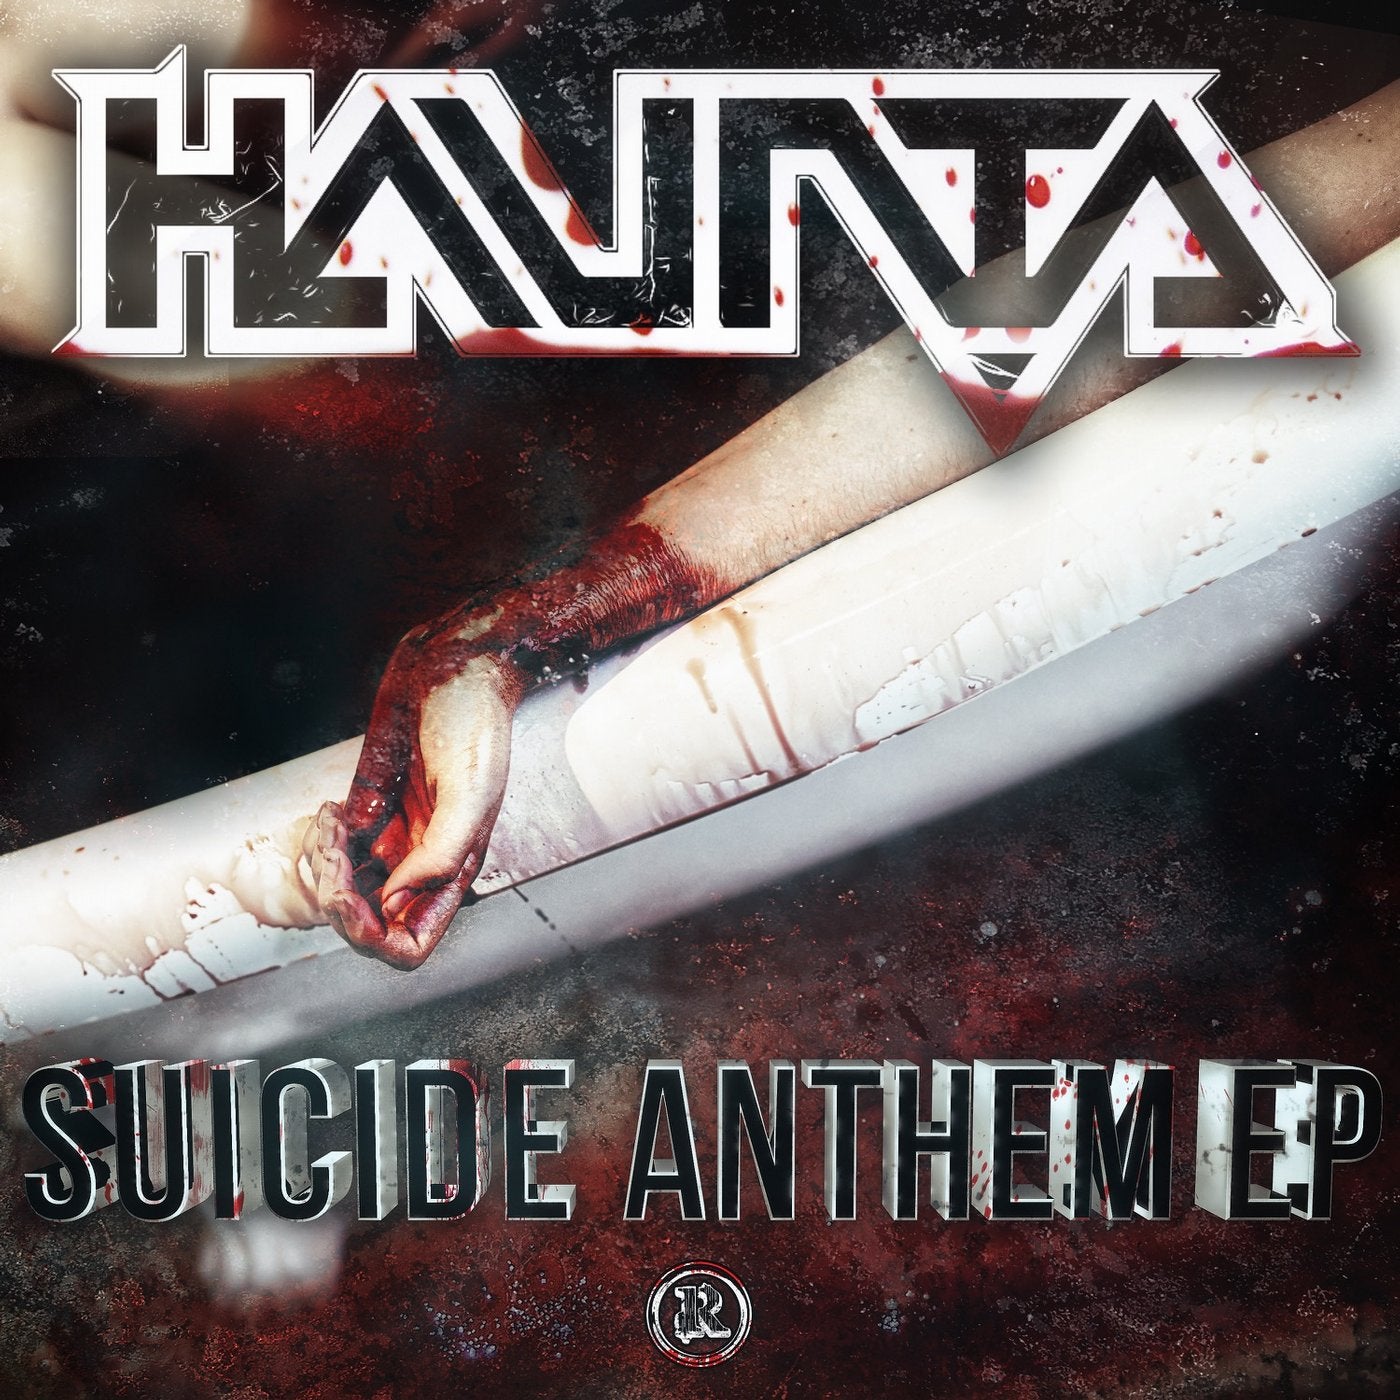 Suicide Anthem EP